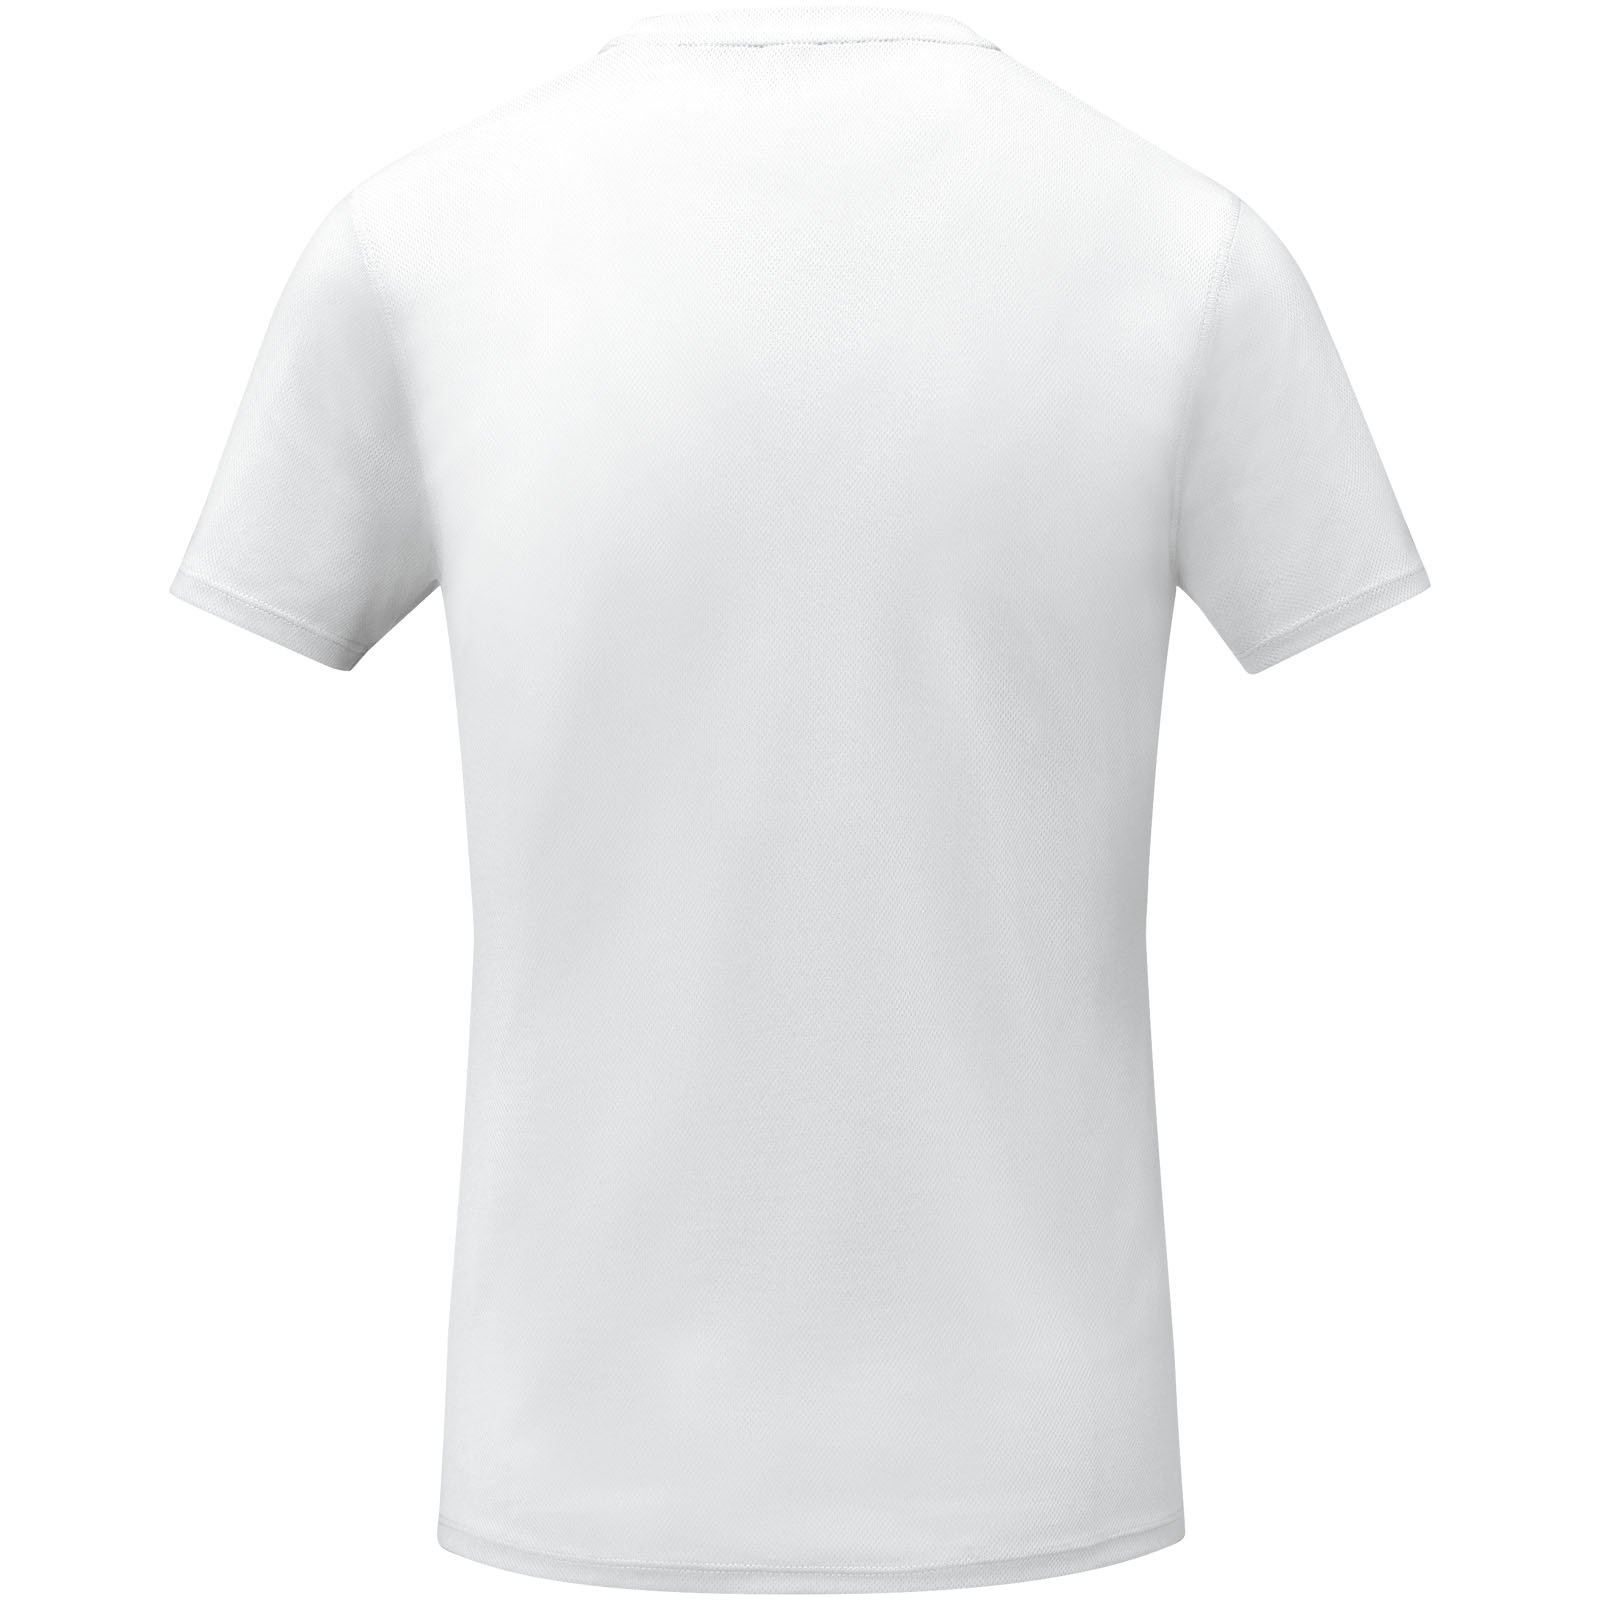 Advertising T-shirts - Kratos short sleeve women's cool fit t-shirt - 2